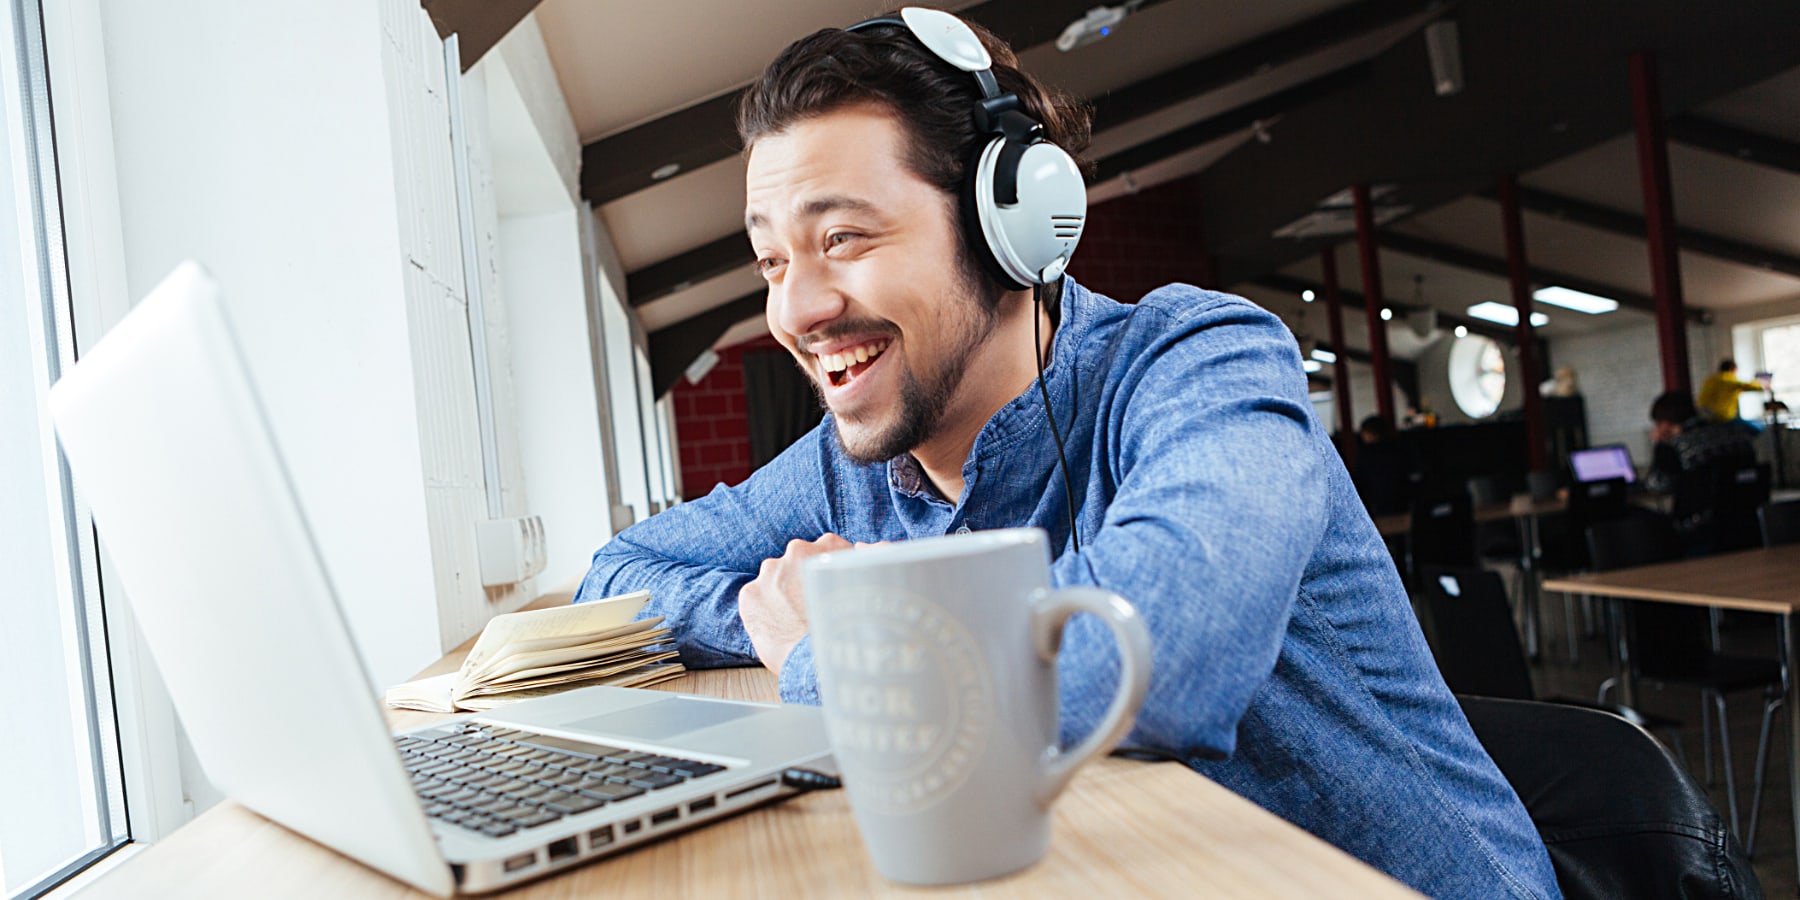 Very happy man in headphones talking to on his laptop.